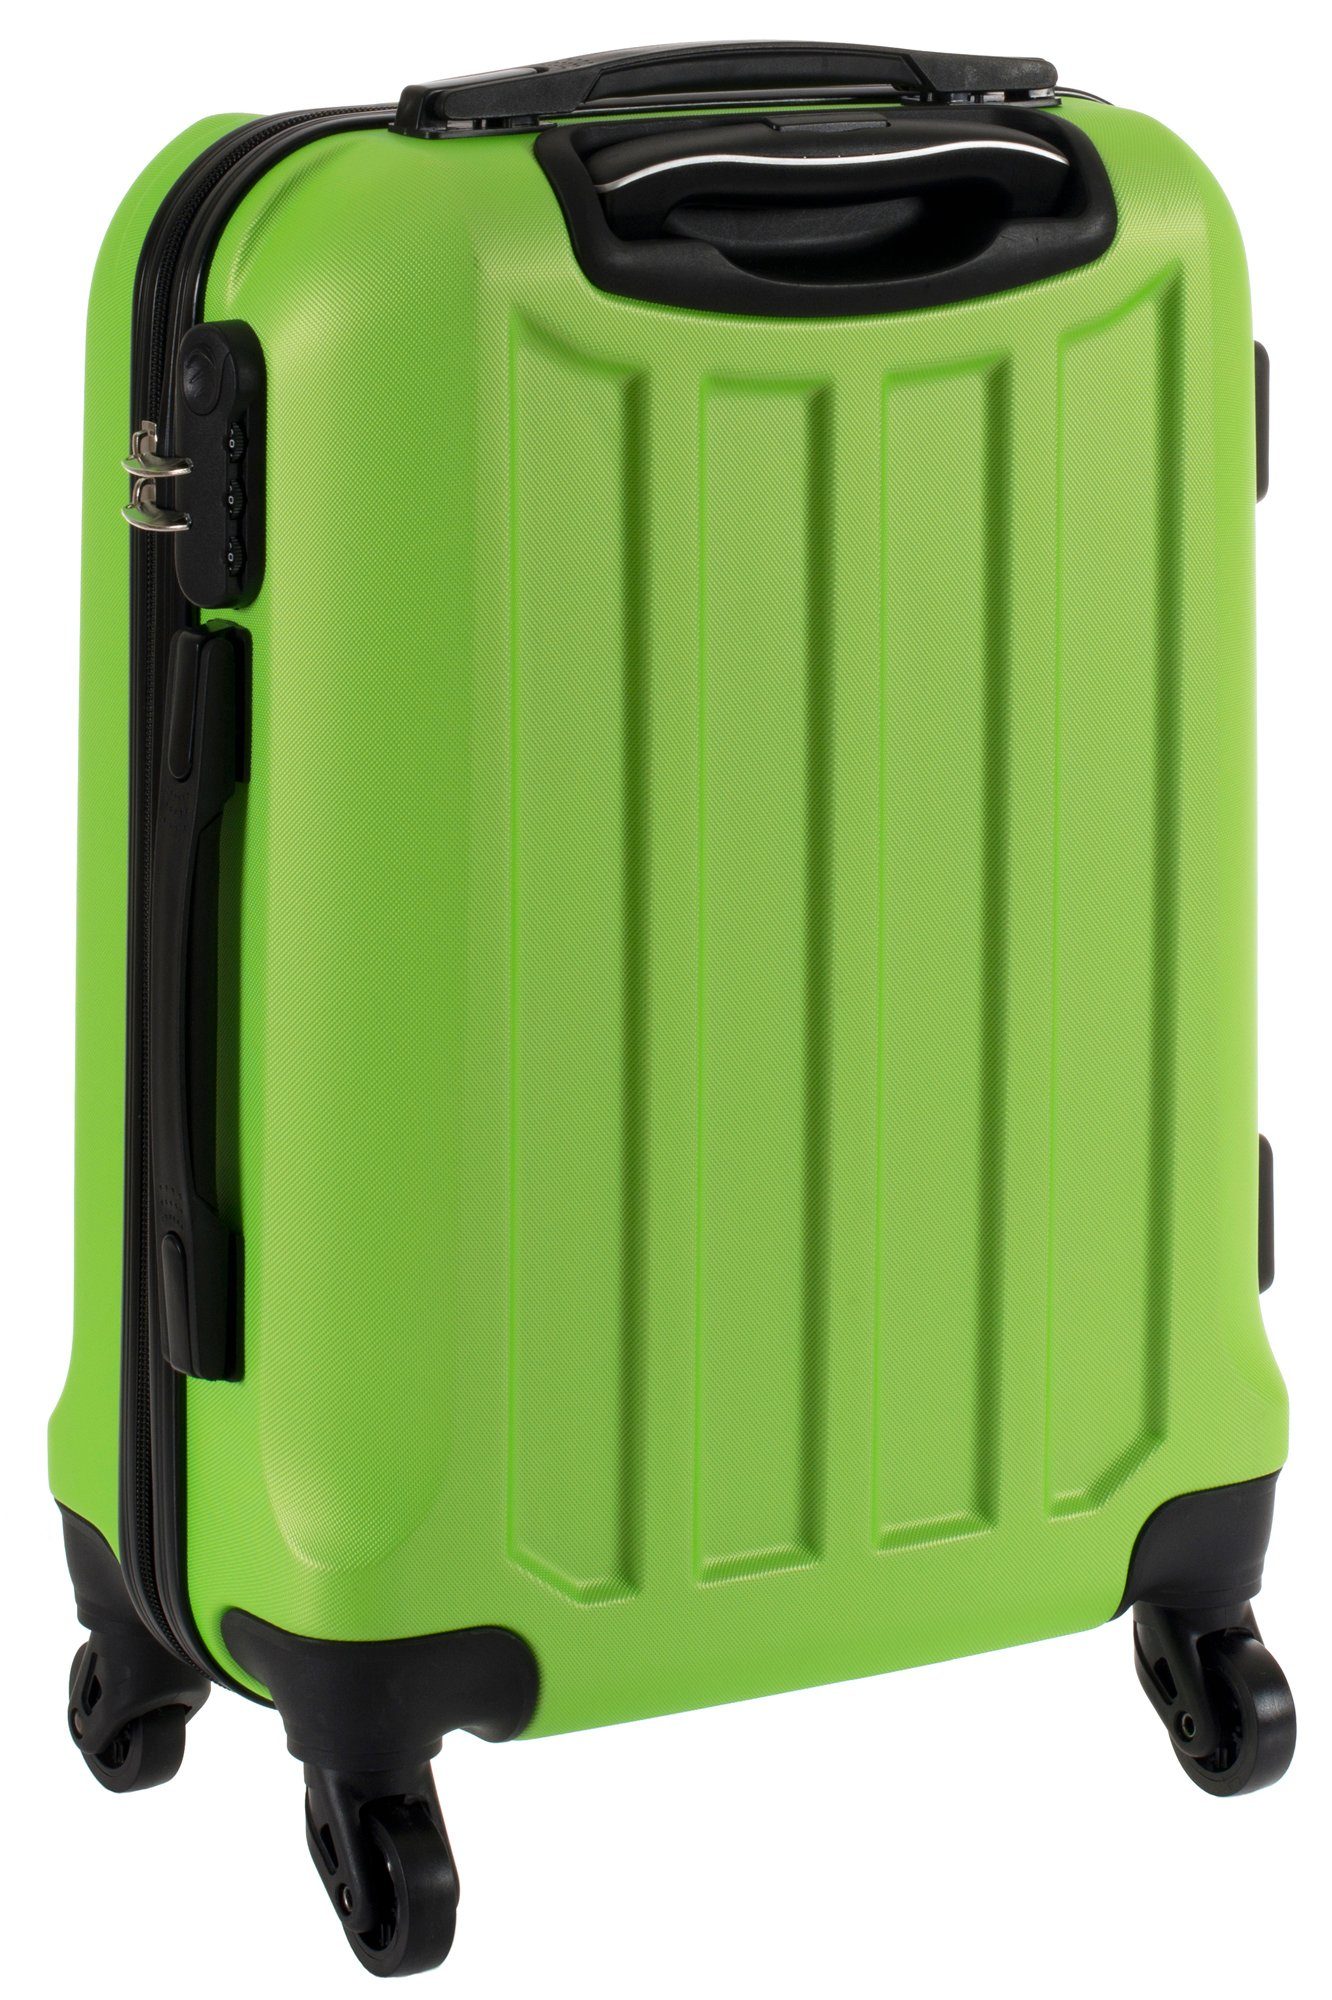 Cahoon Handgepäck-Trolley grün Kabinengepäck Trolley Rollen 4 Hartschalenkoffer Handgepäck Koffer 4-Rollen